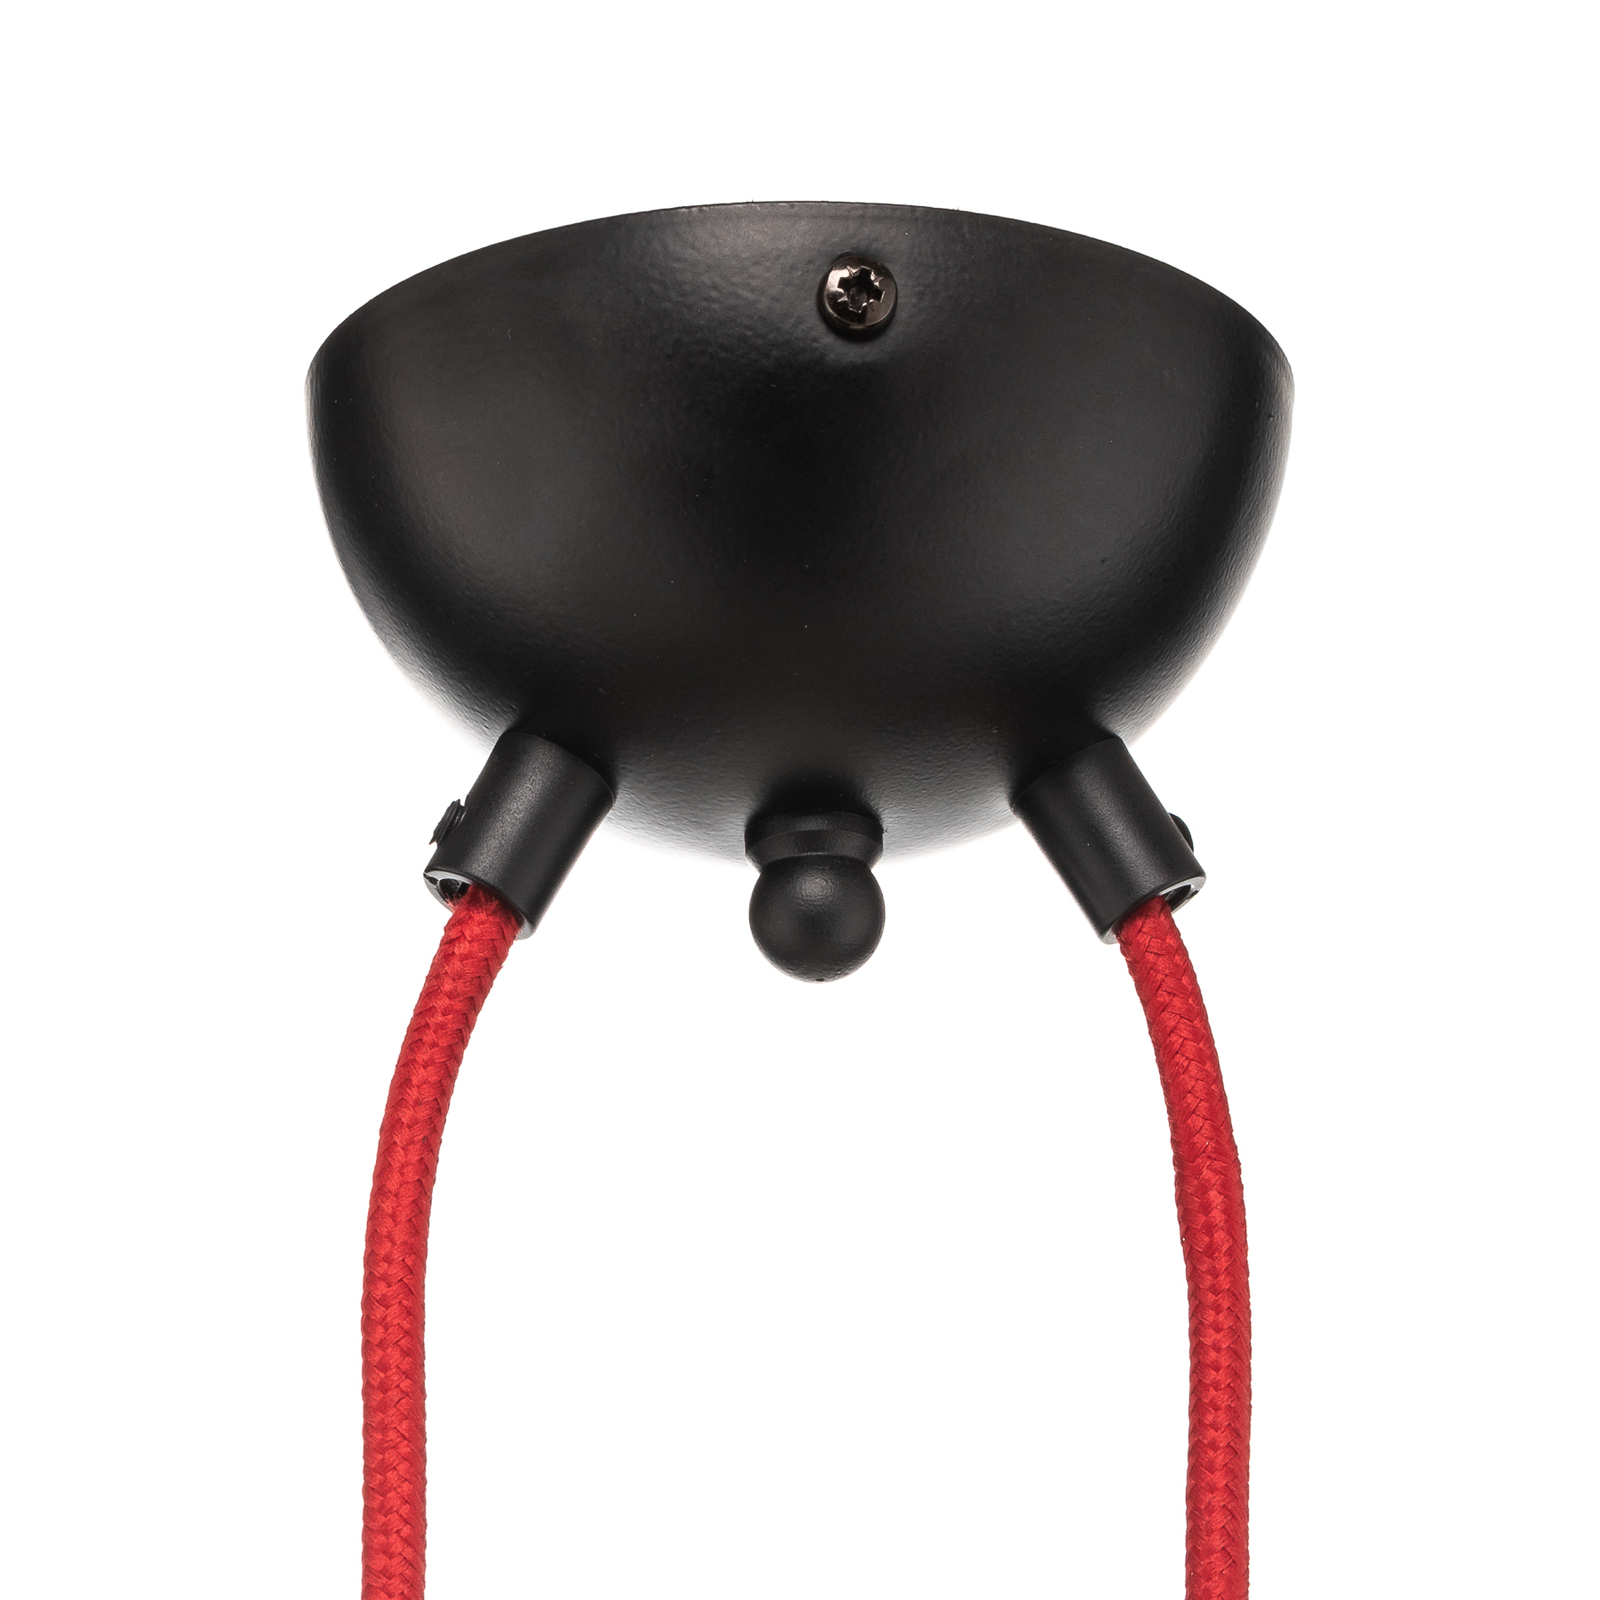 Bobi 2 pendant light in black, red cable, 2-bulb